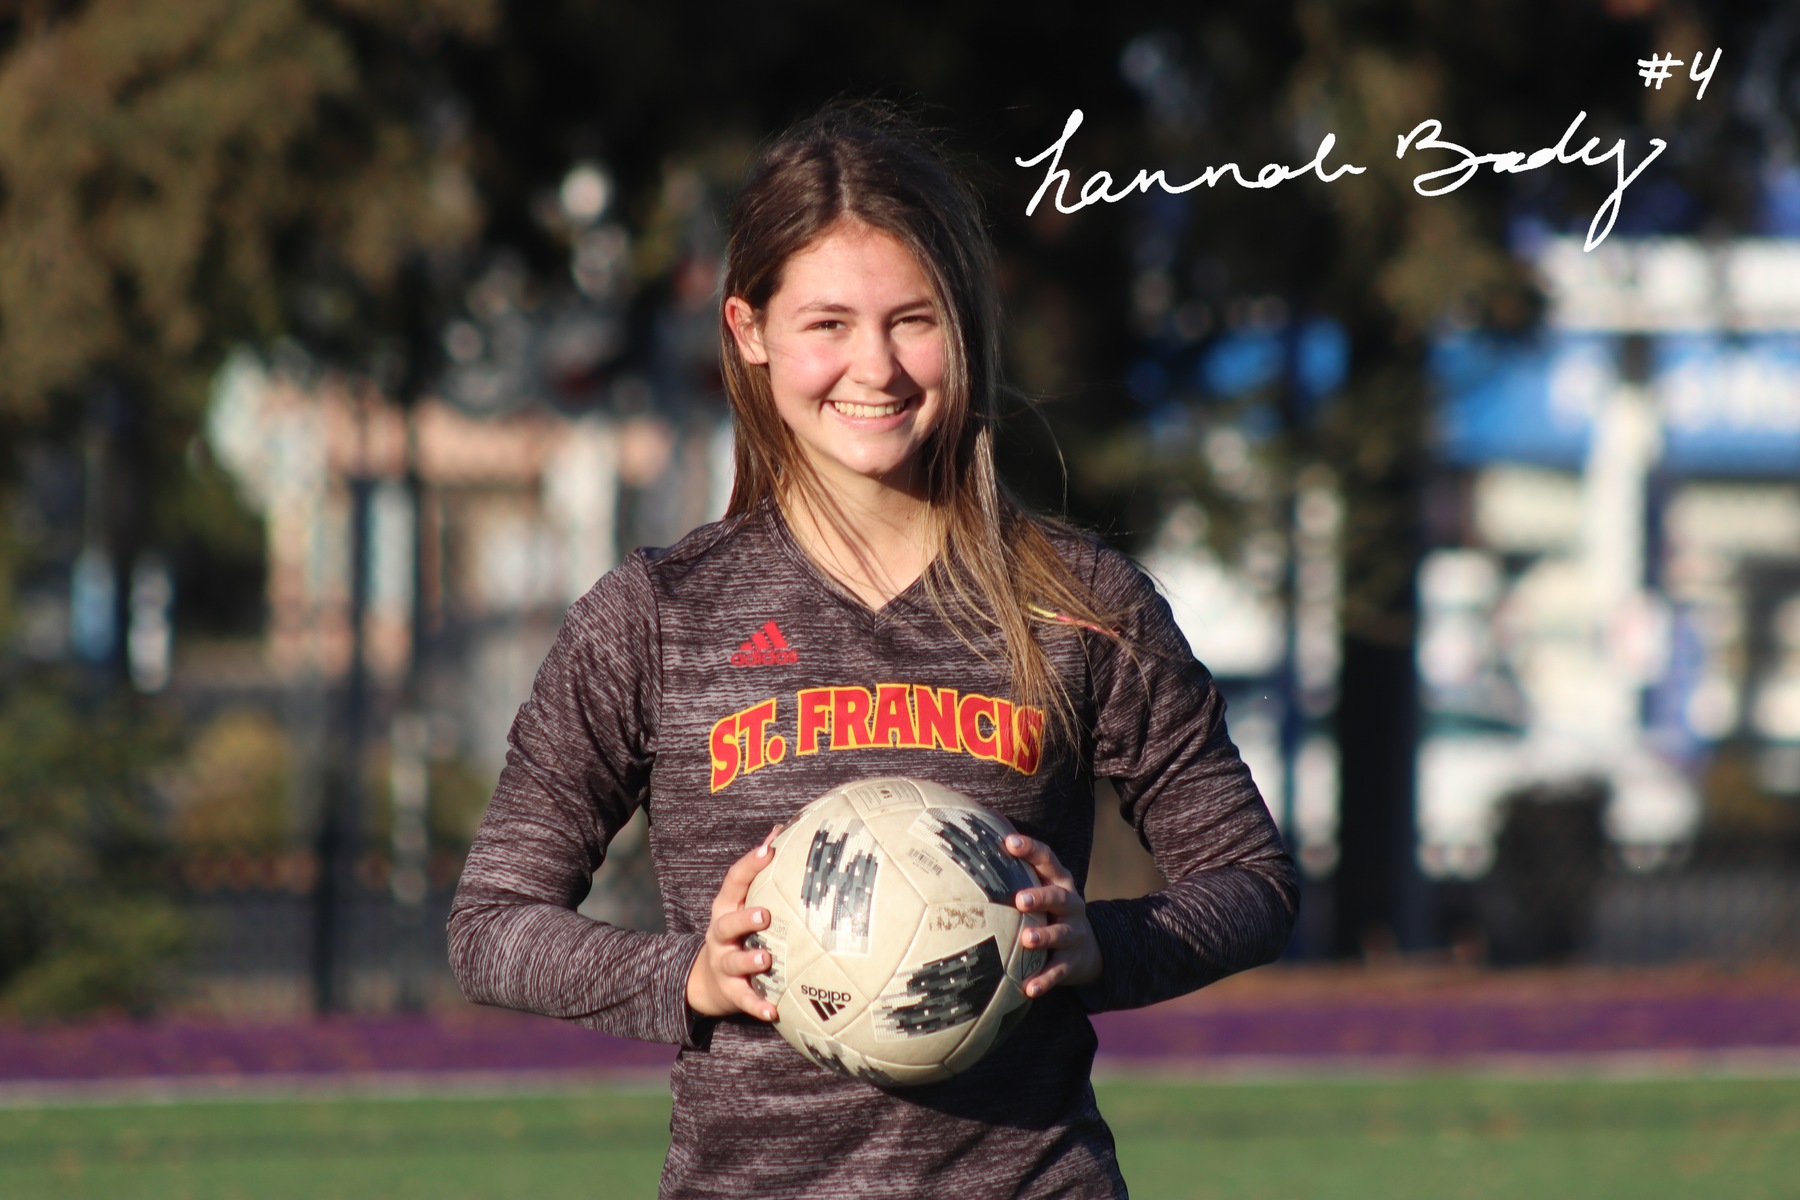 Get to Know: Soccer's #4 Hannah Brady